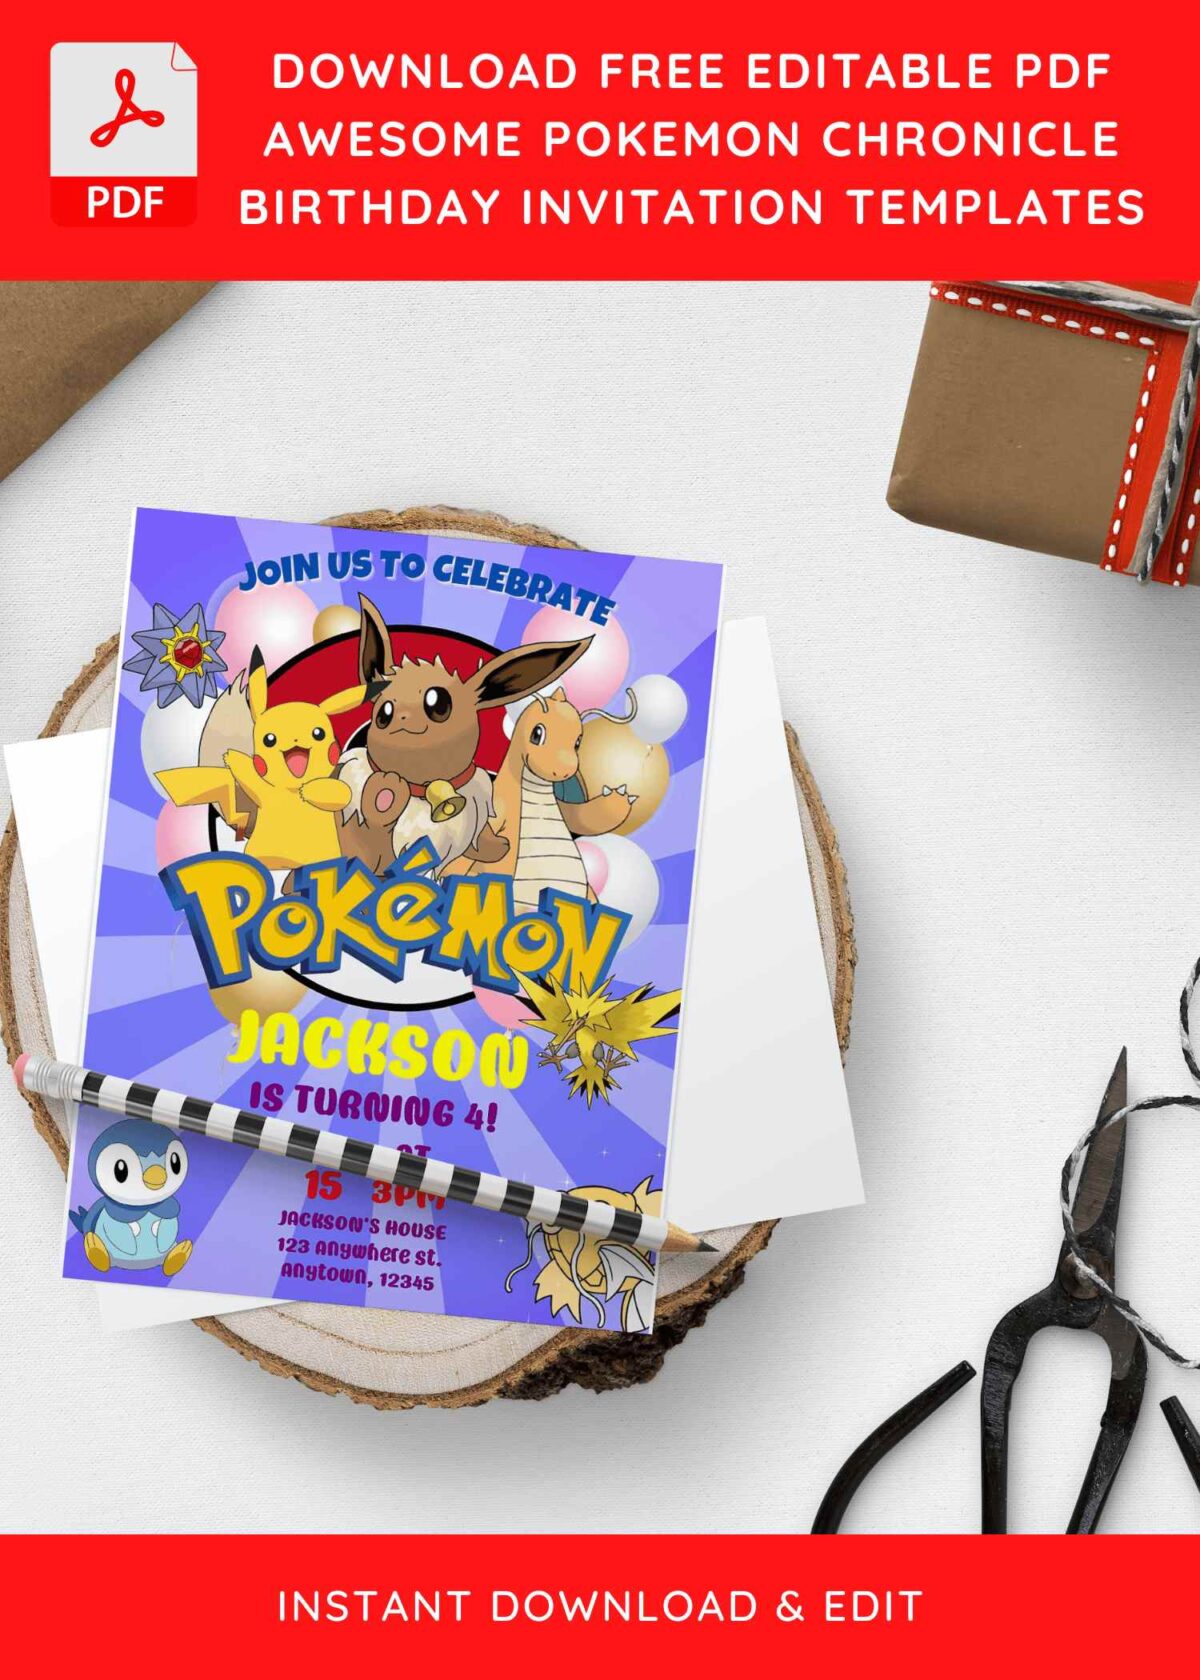 (Free Editable PDF) Epic Pokémon Chronicle Birthday Invitation Templates with Pikachu